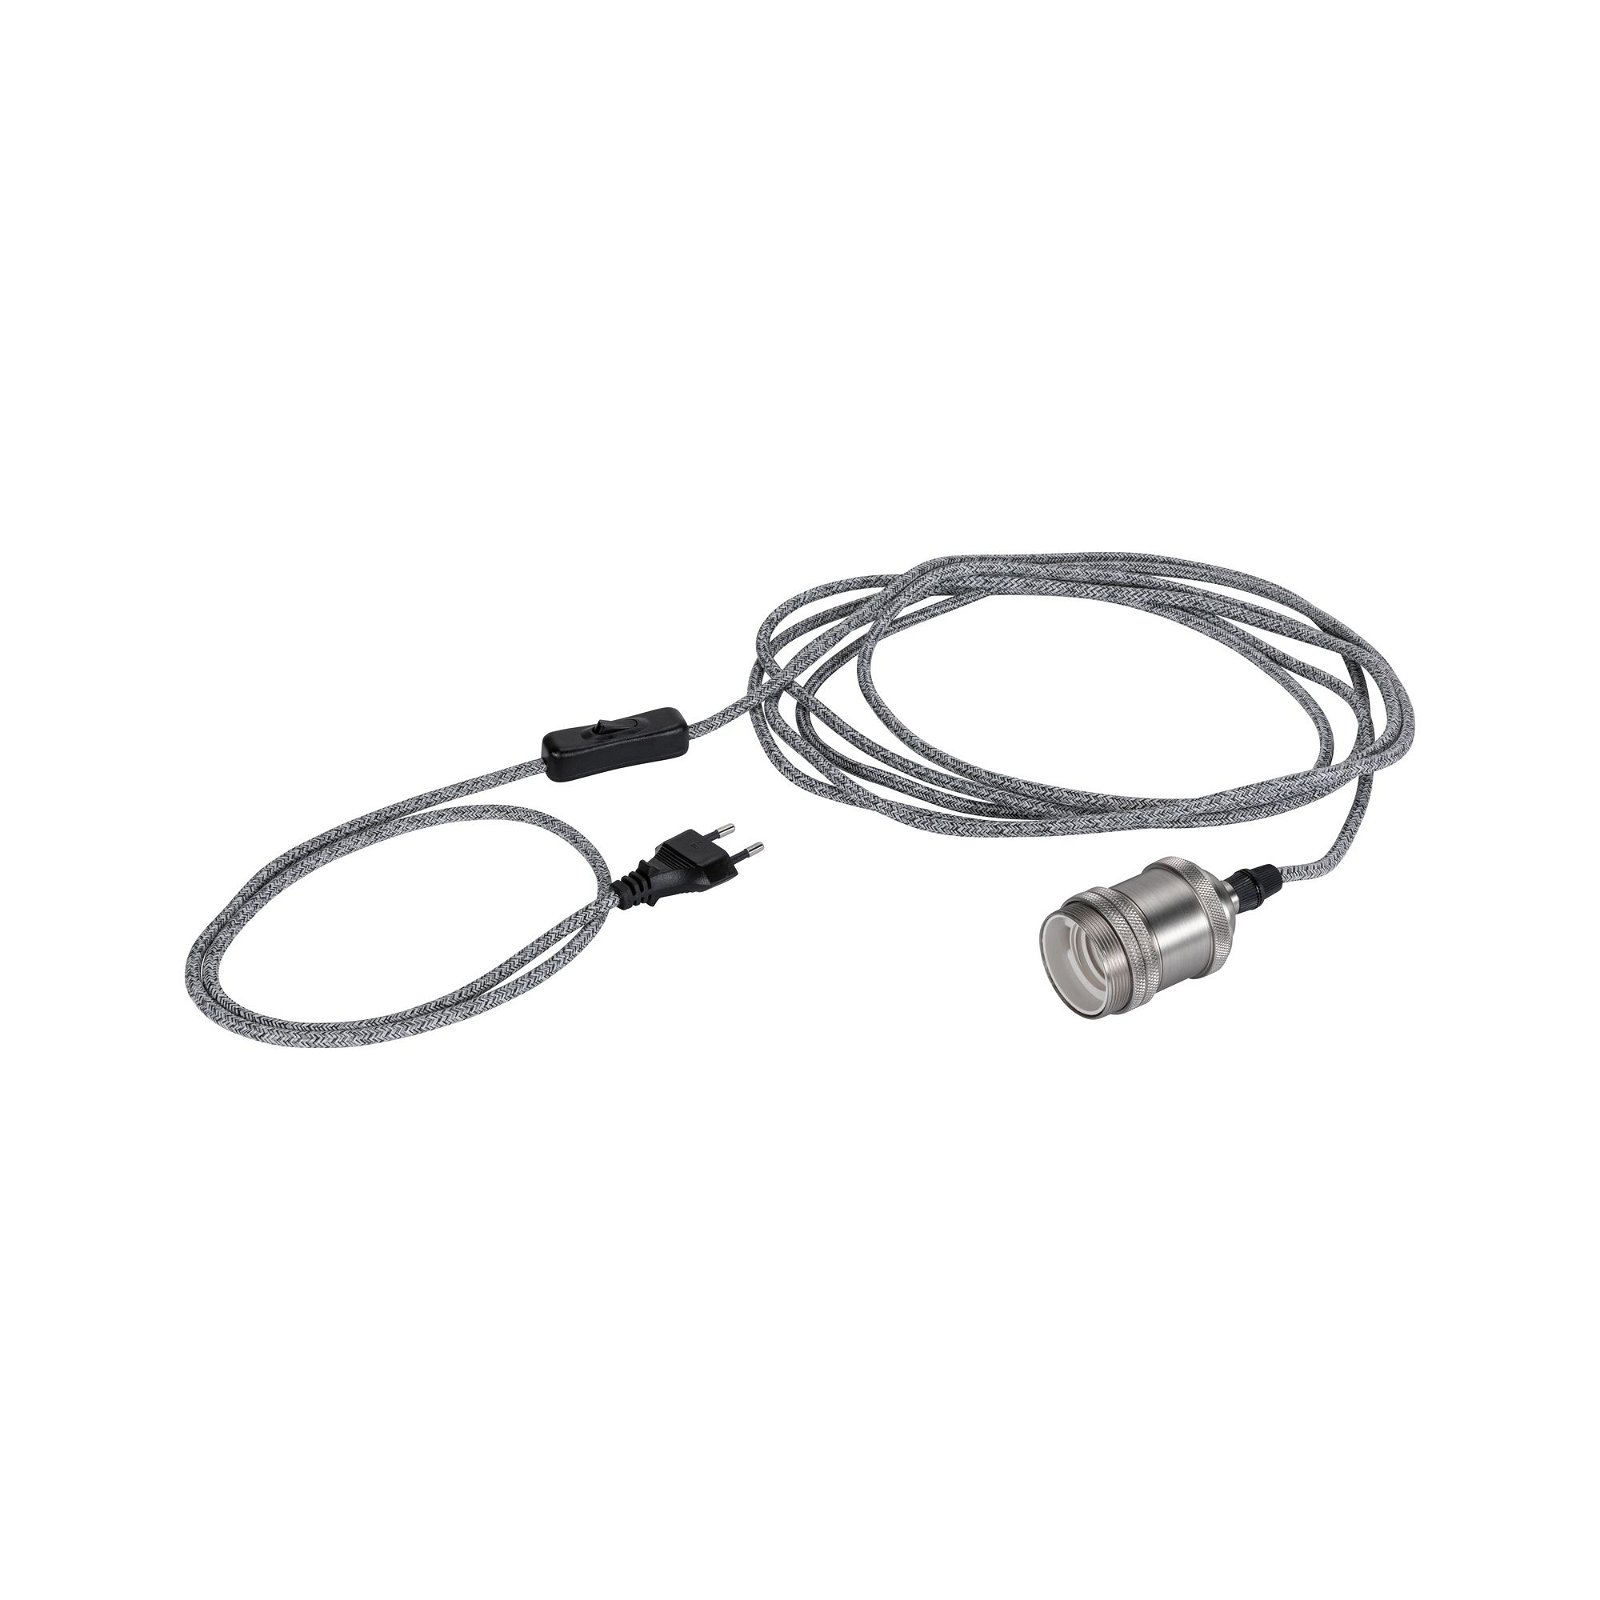 Neordic Luminaire en suspension Eldar connecteur inclus E27 max. 20W Gris/Nickel gradable Métal